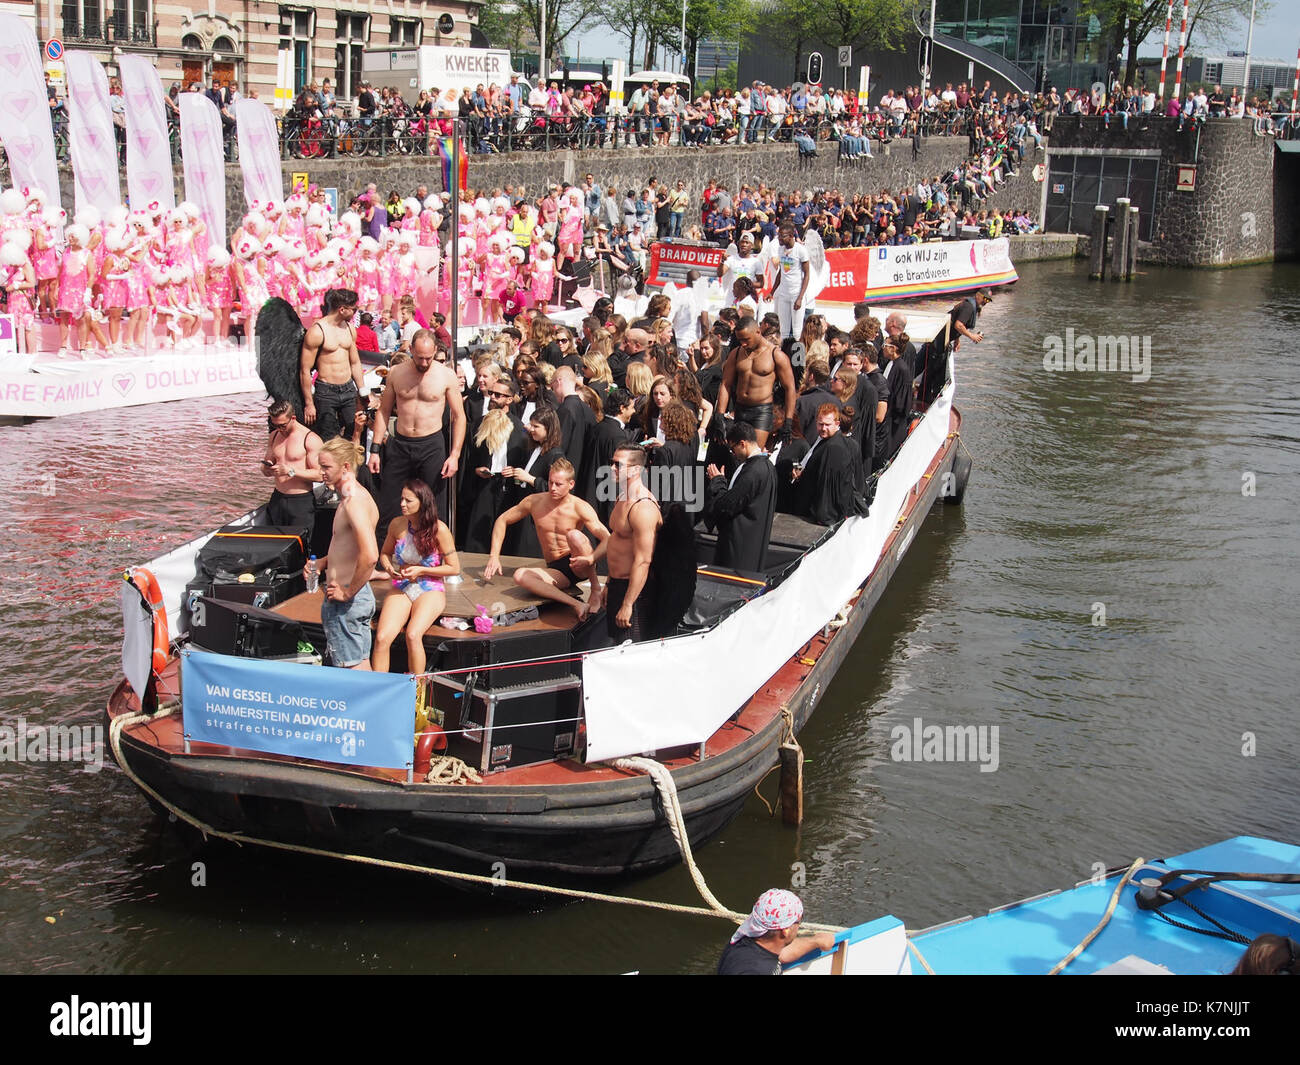 Barco advocaten boot, Canal Parade Amsterdam 2017 Foto 7 Foto de stock